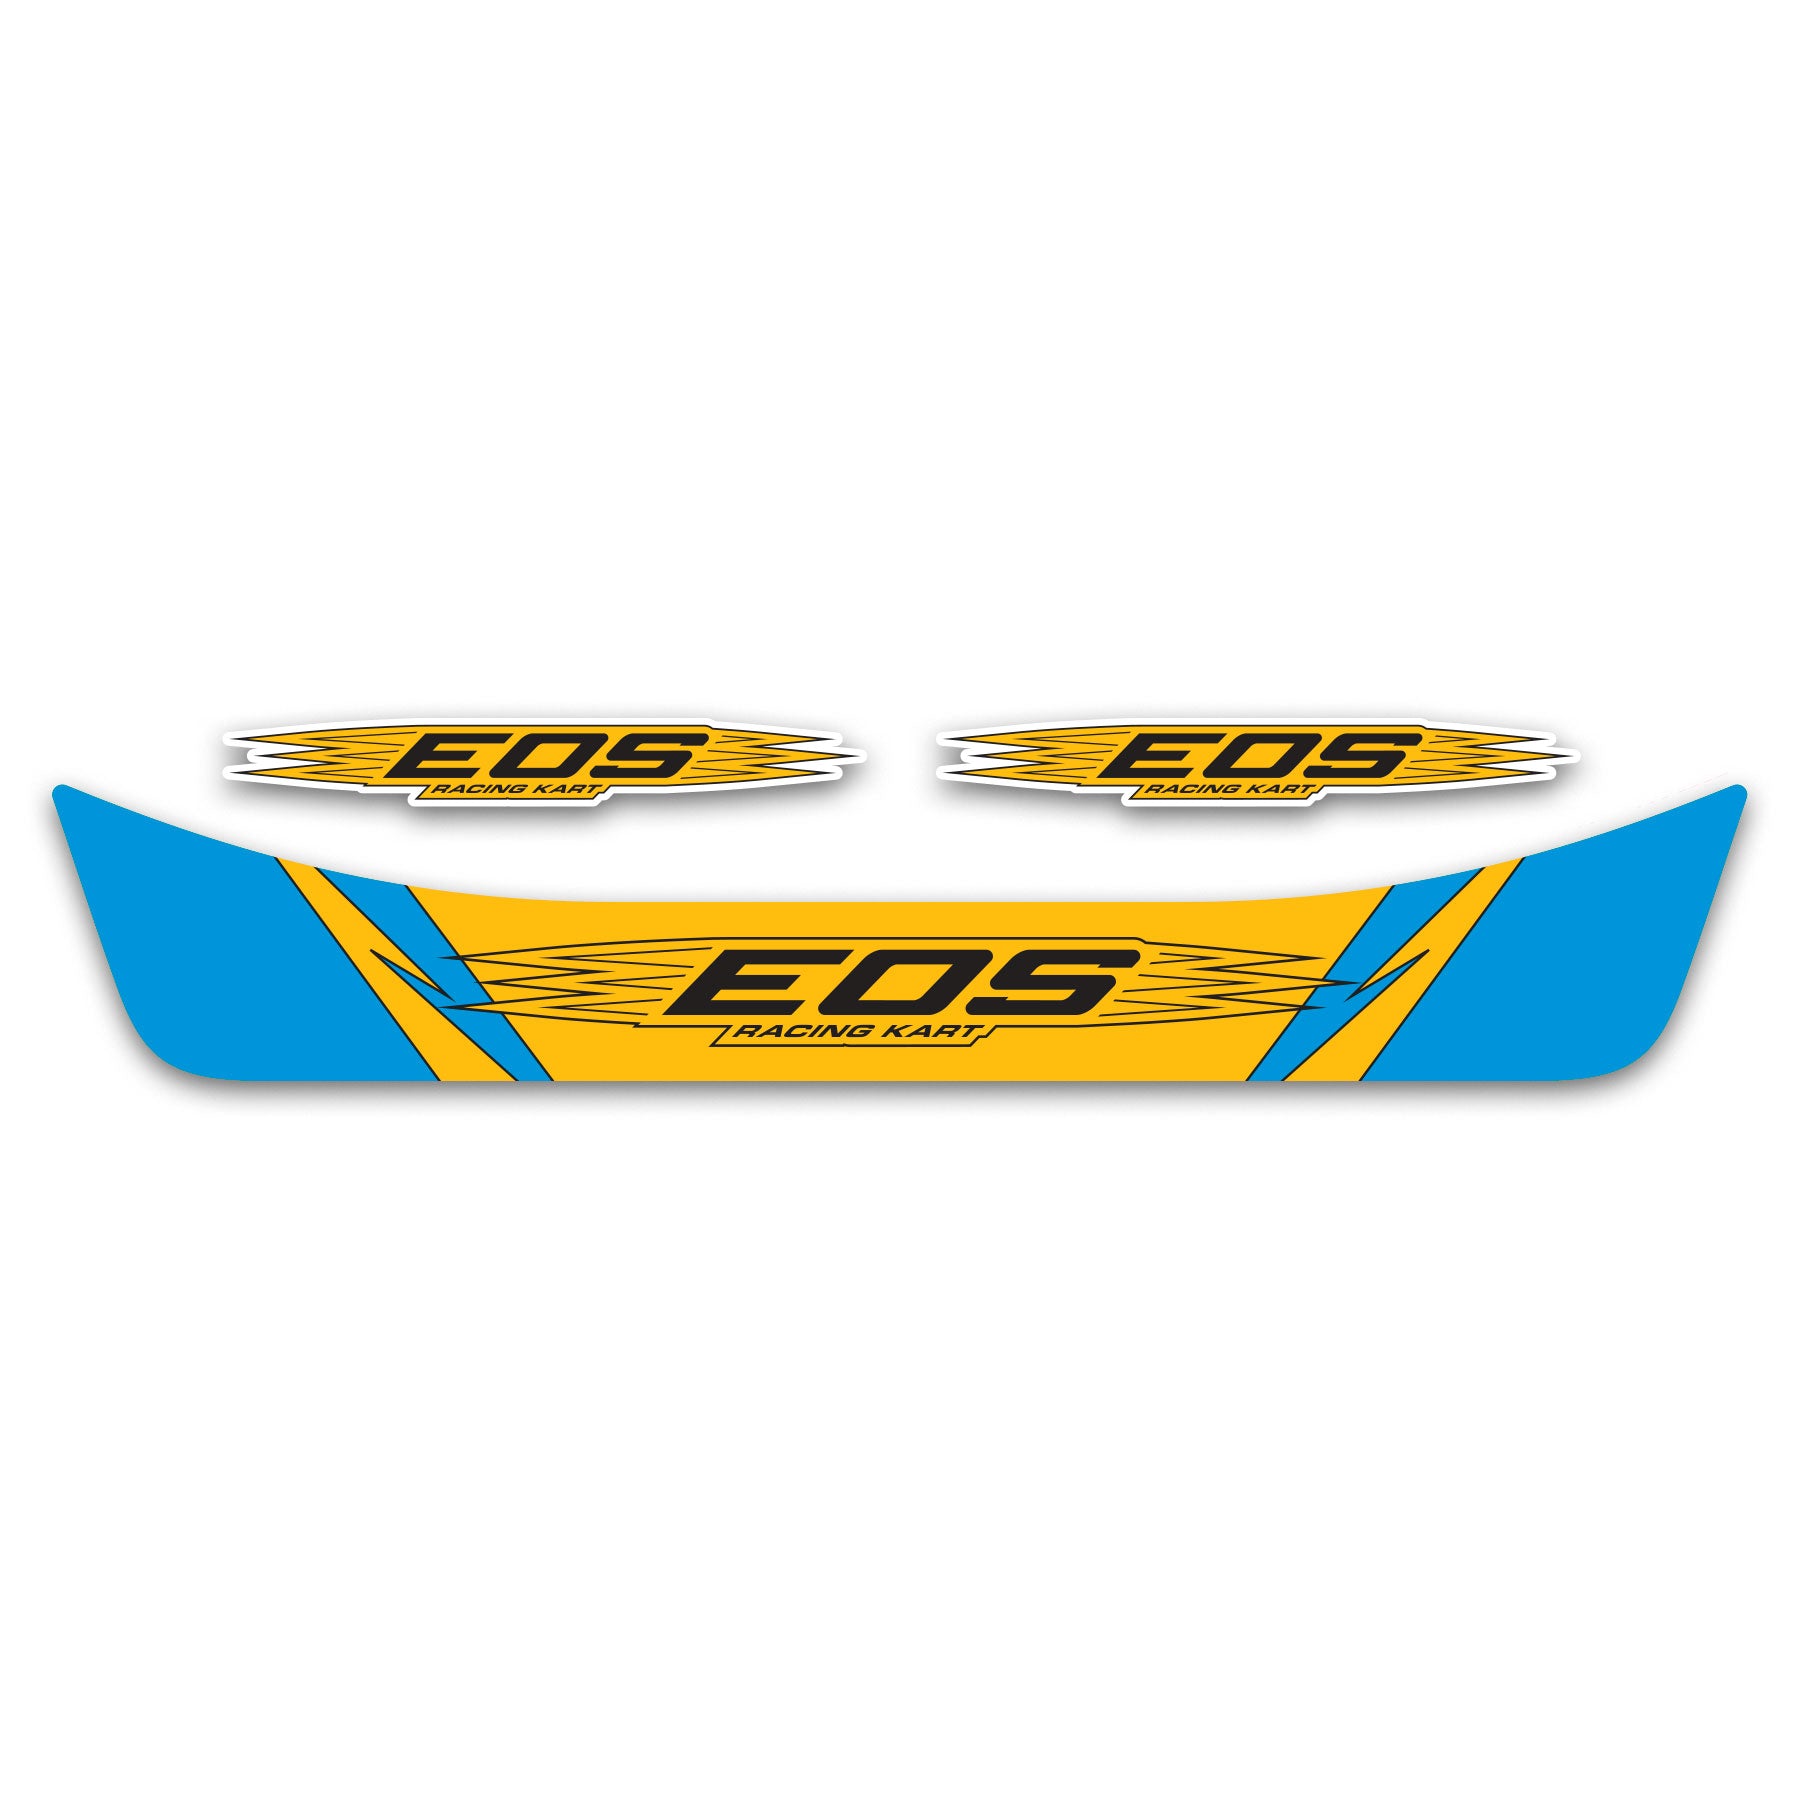 EOS Kart Helmet Visor Sticker. EOS Racing Kart Sticker